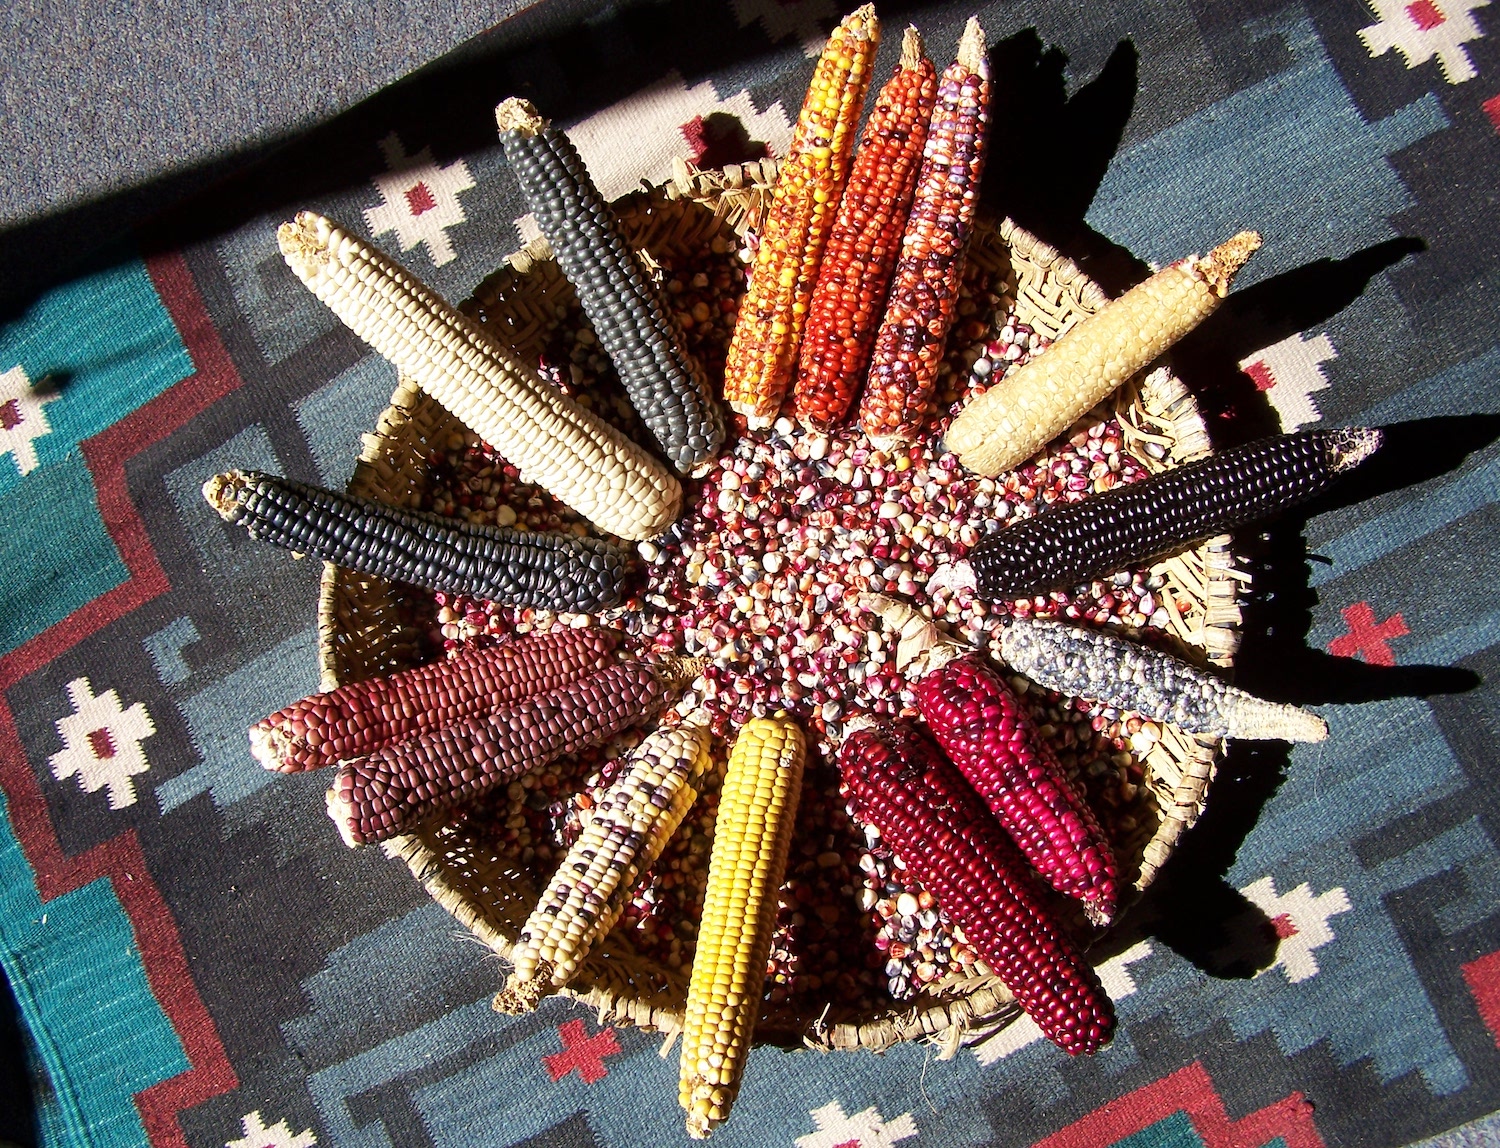 Hopi maize varieties